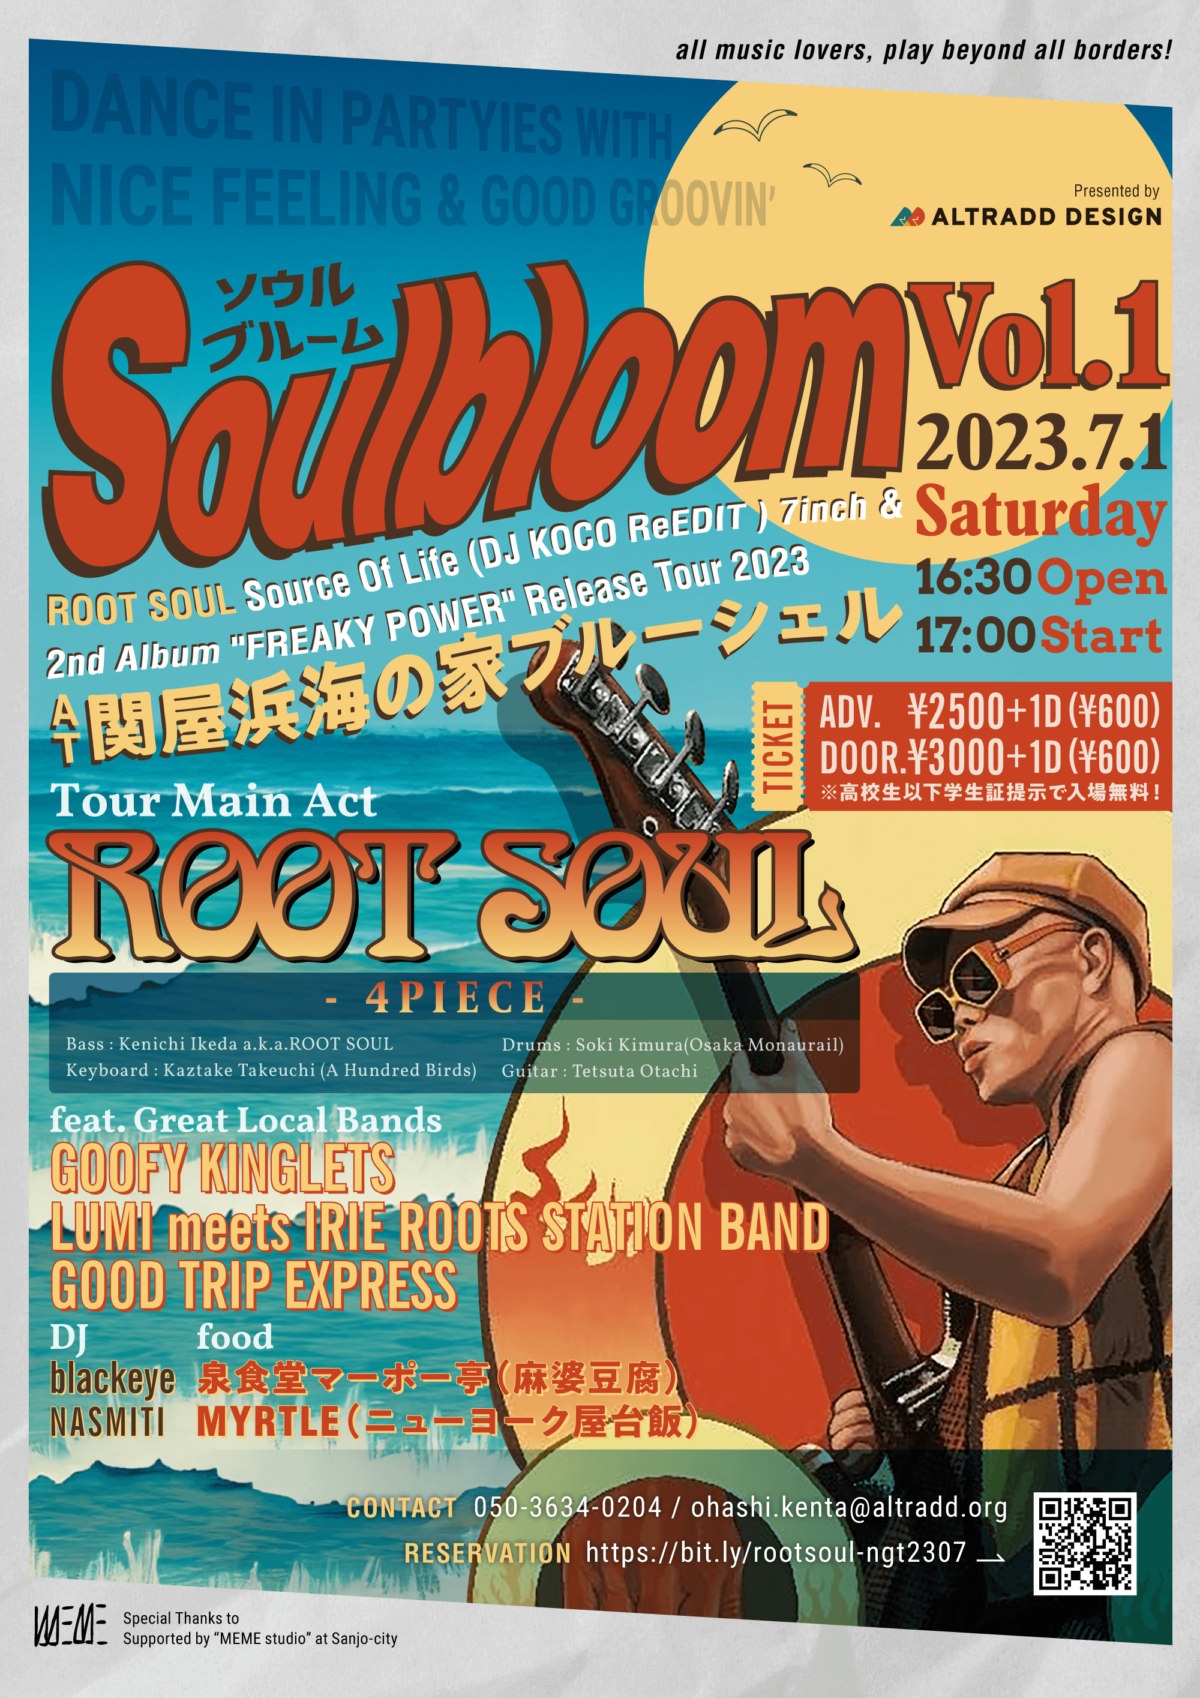 2023.7.1 Sat // Soulbloom vol.1 〜 ROOT SOUL Release Tour in Niigata